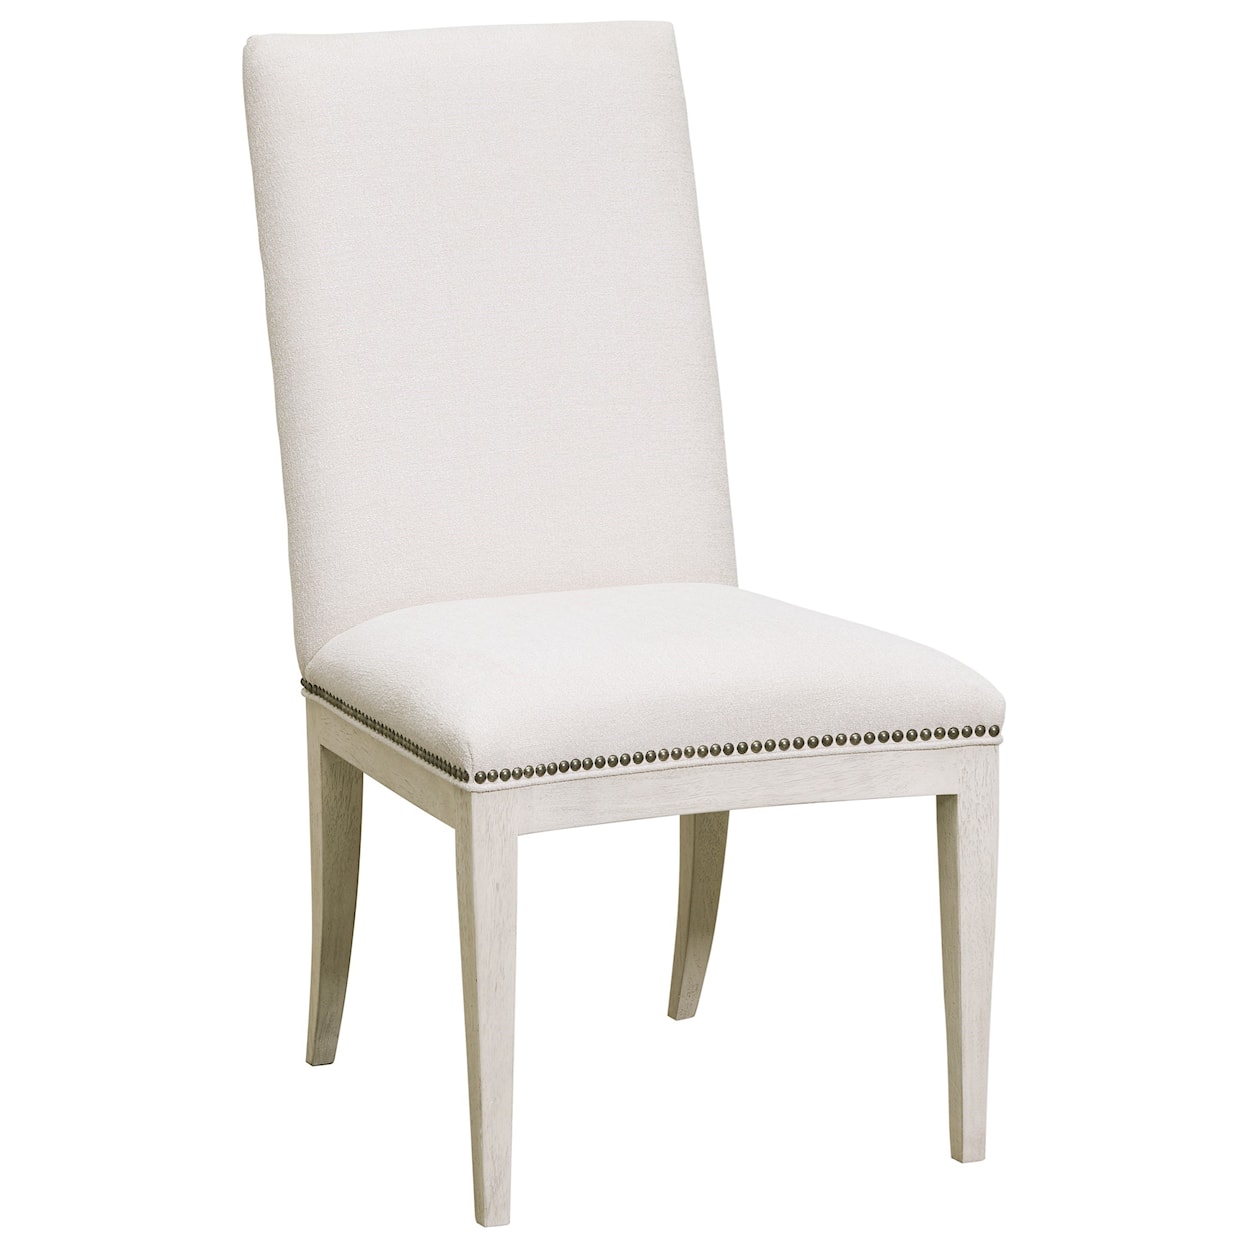 Pulaski Furniture District 3 Upholstered Side Chair